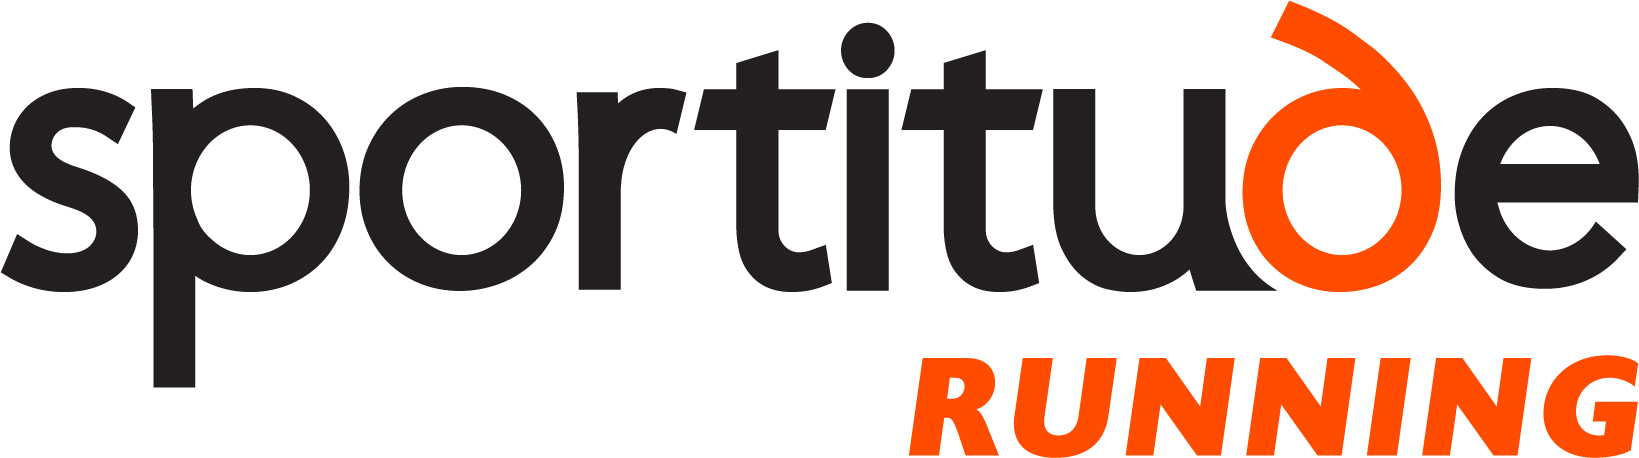 Logo Sportitude single REV colour RGB 1170x365 1 768x240